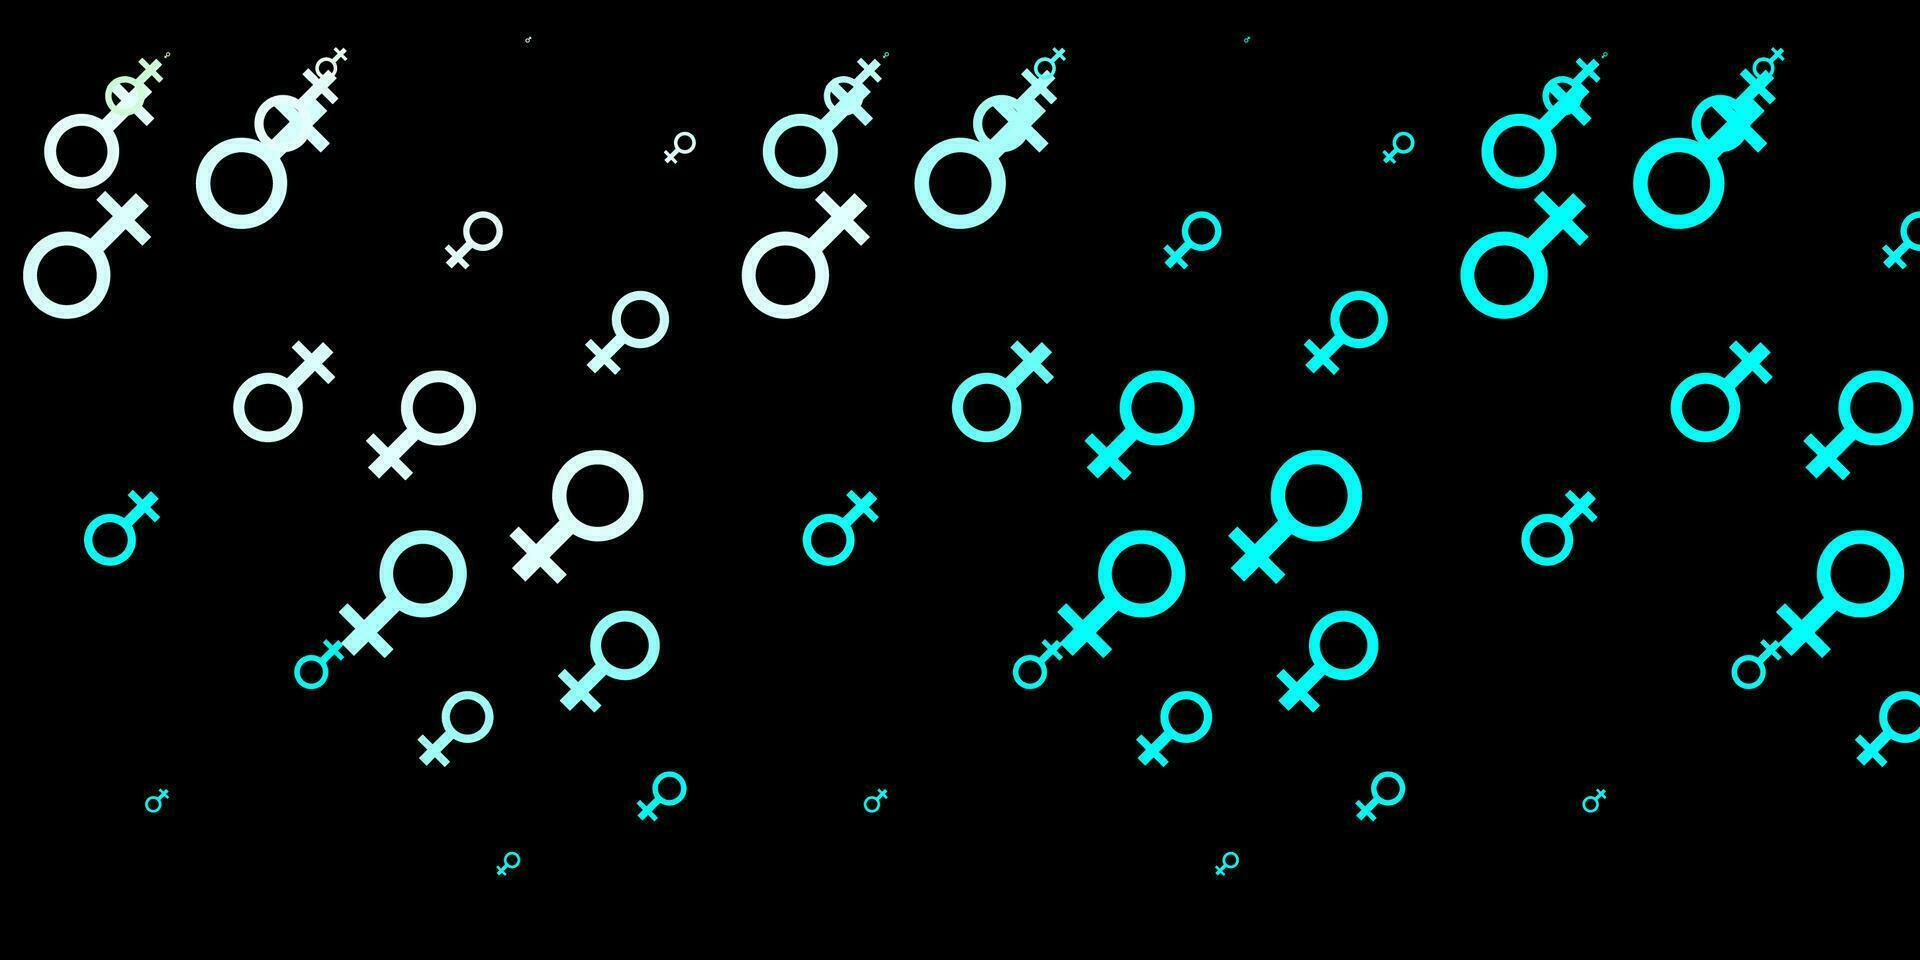 fundo vector verde escuro com símbolos de mulher.